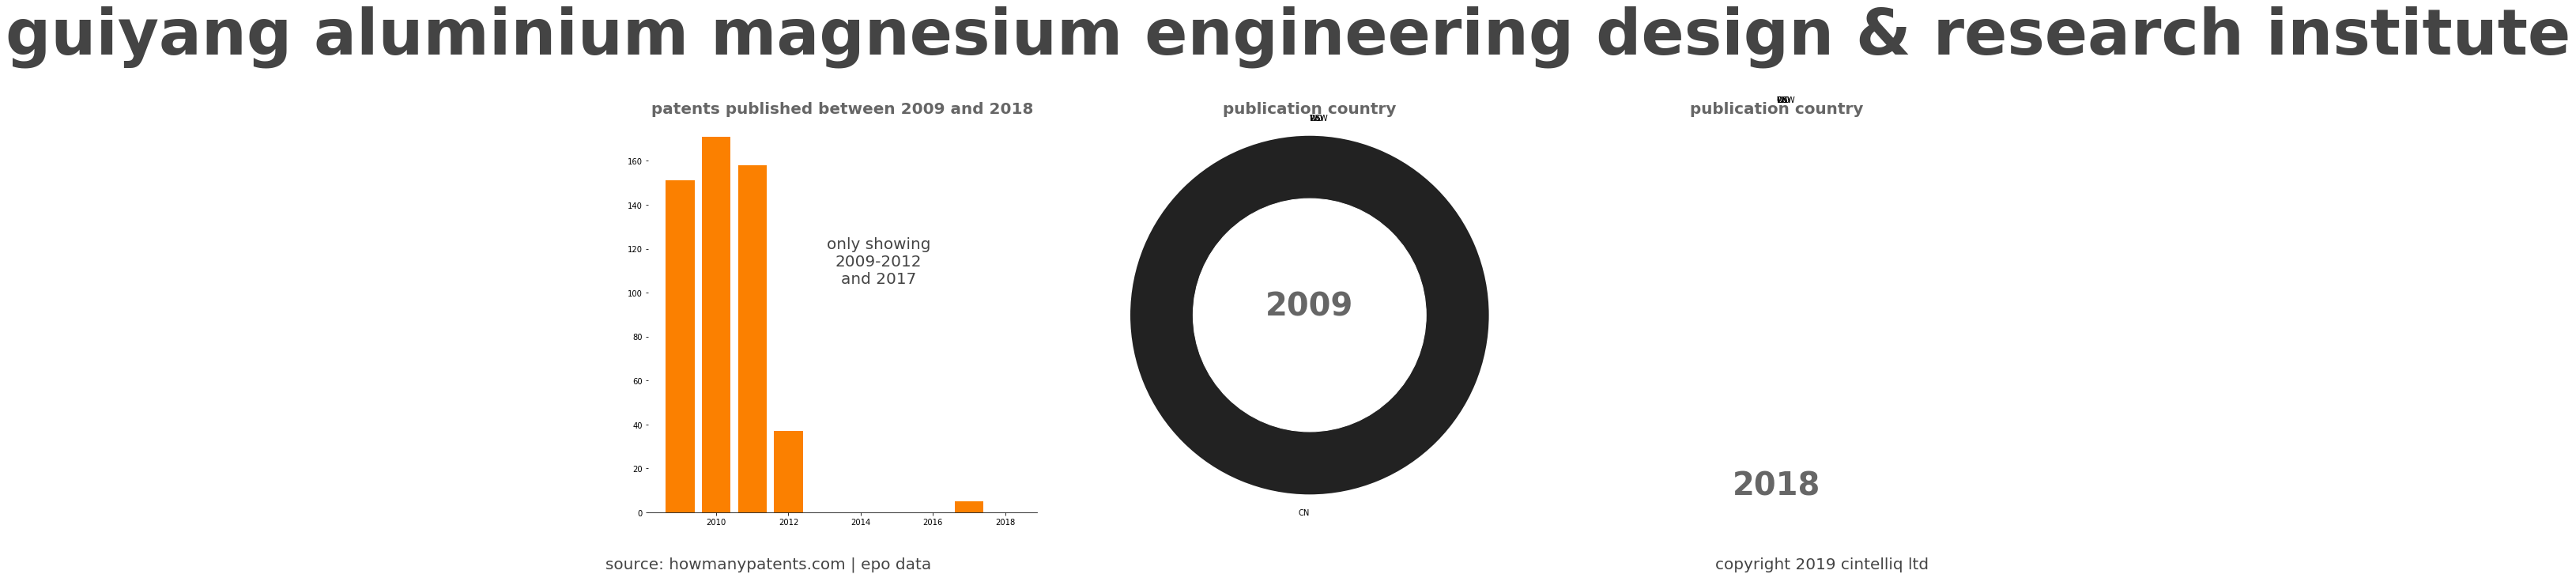 summary of patents for Guiyang Aluminium Magnesium Engineering Design & Research Institute